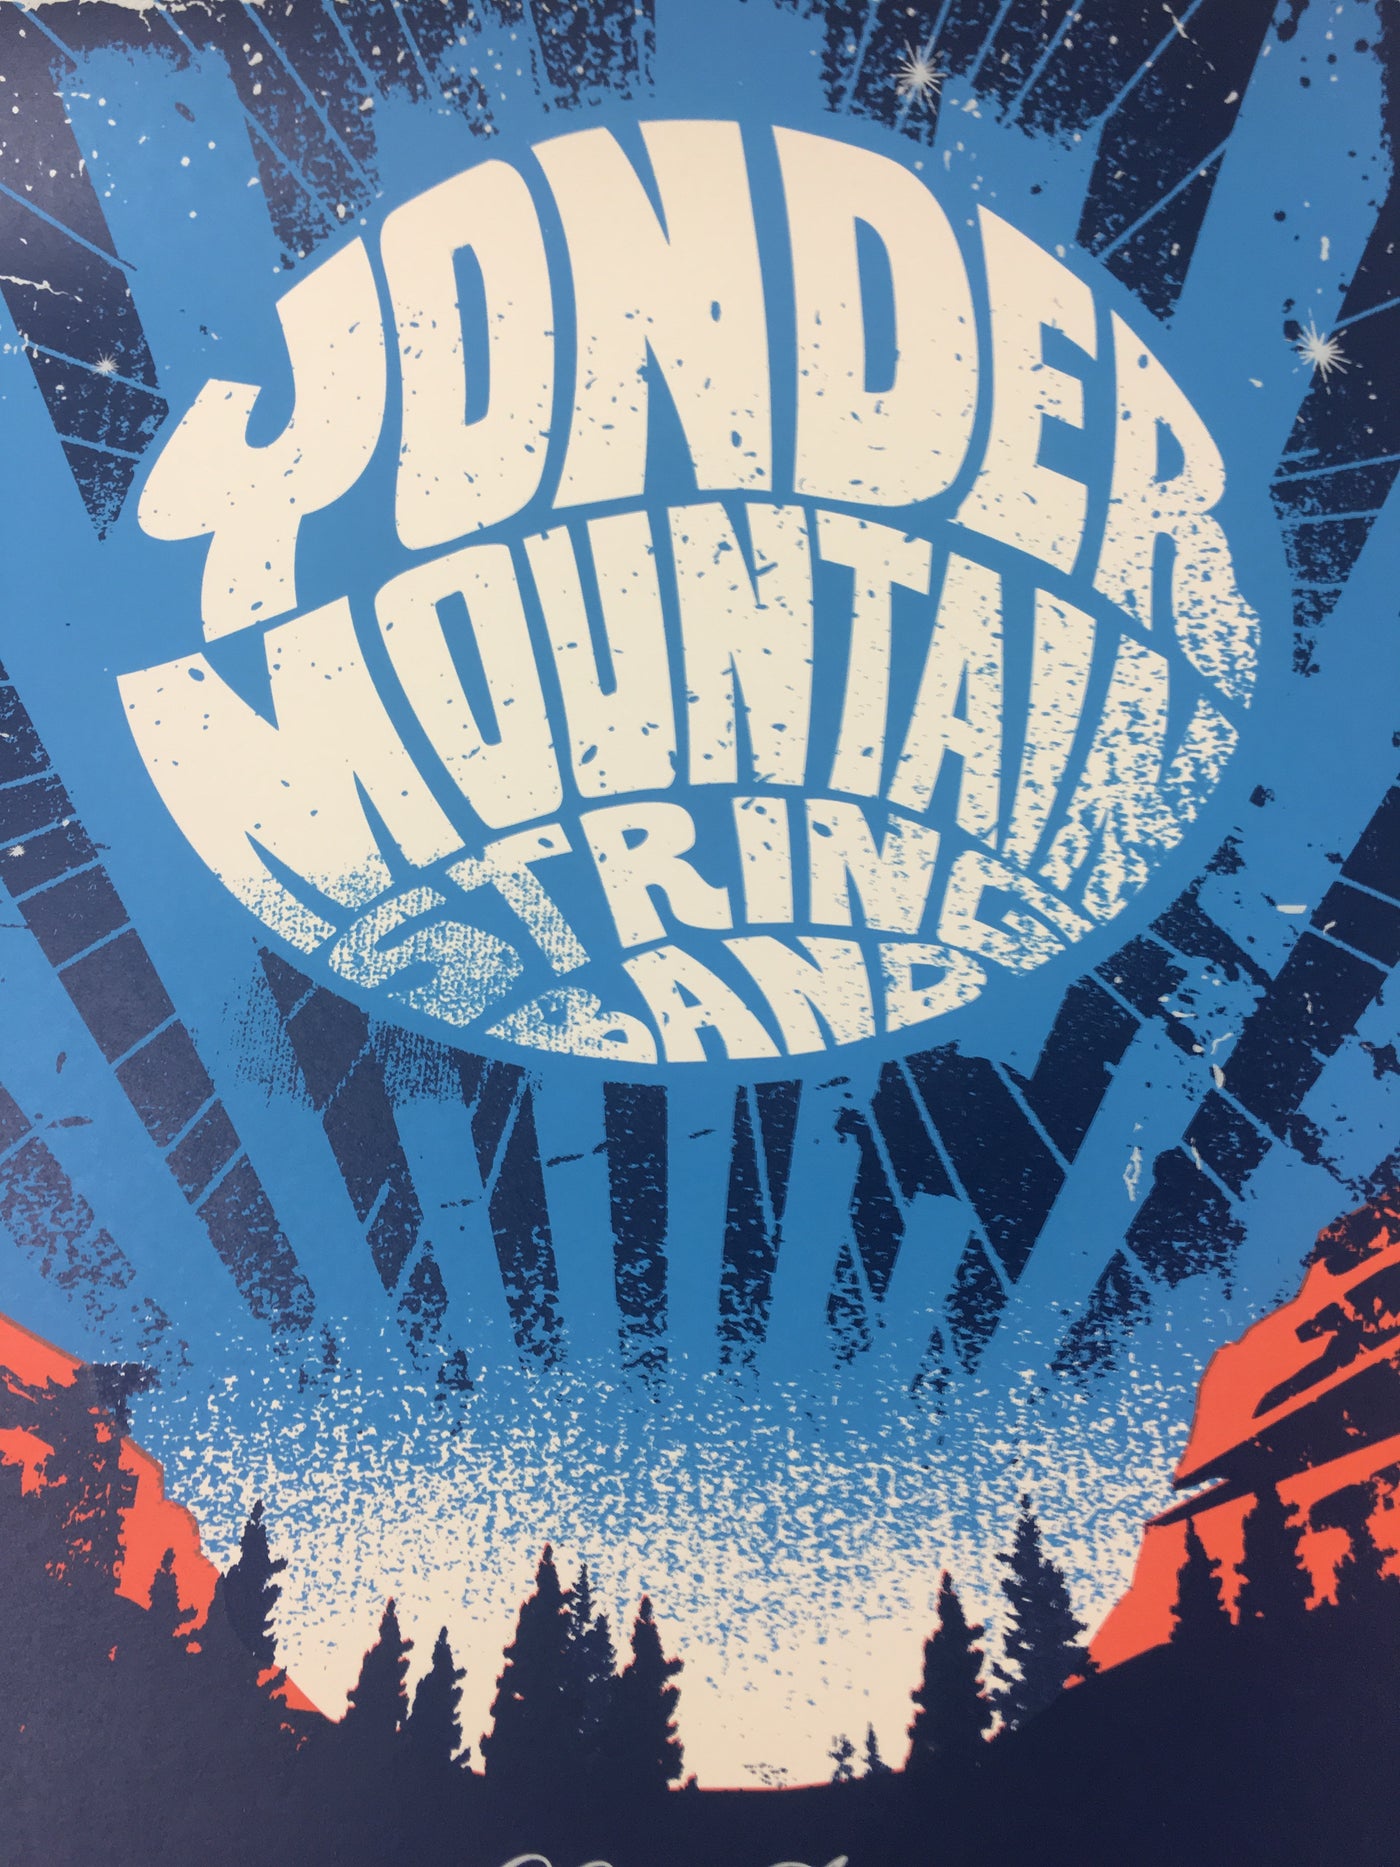 Yonder Mountain String Band - 2007 Methane Studios poster Morrison, CO ...